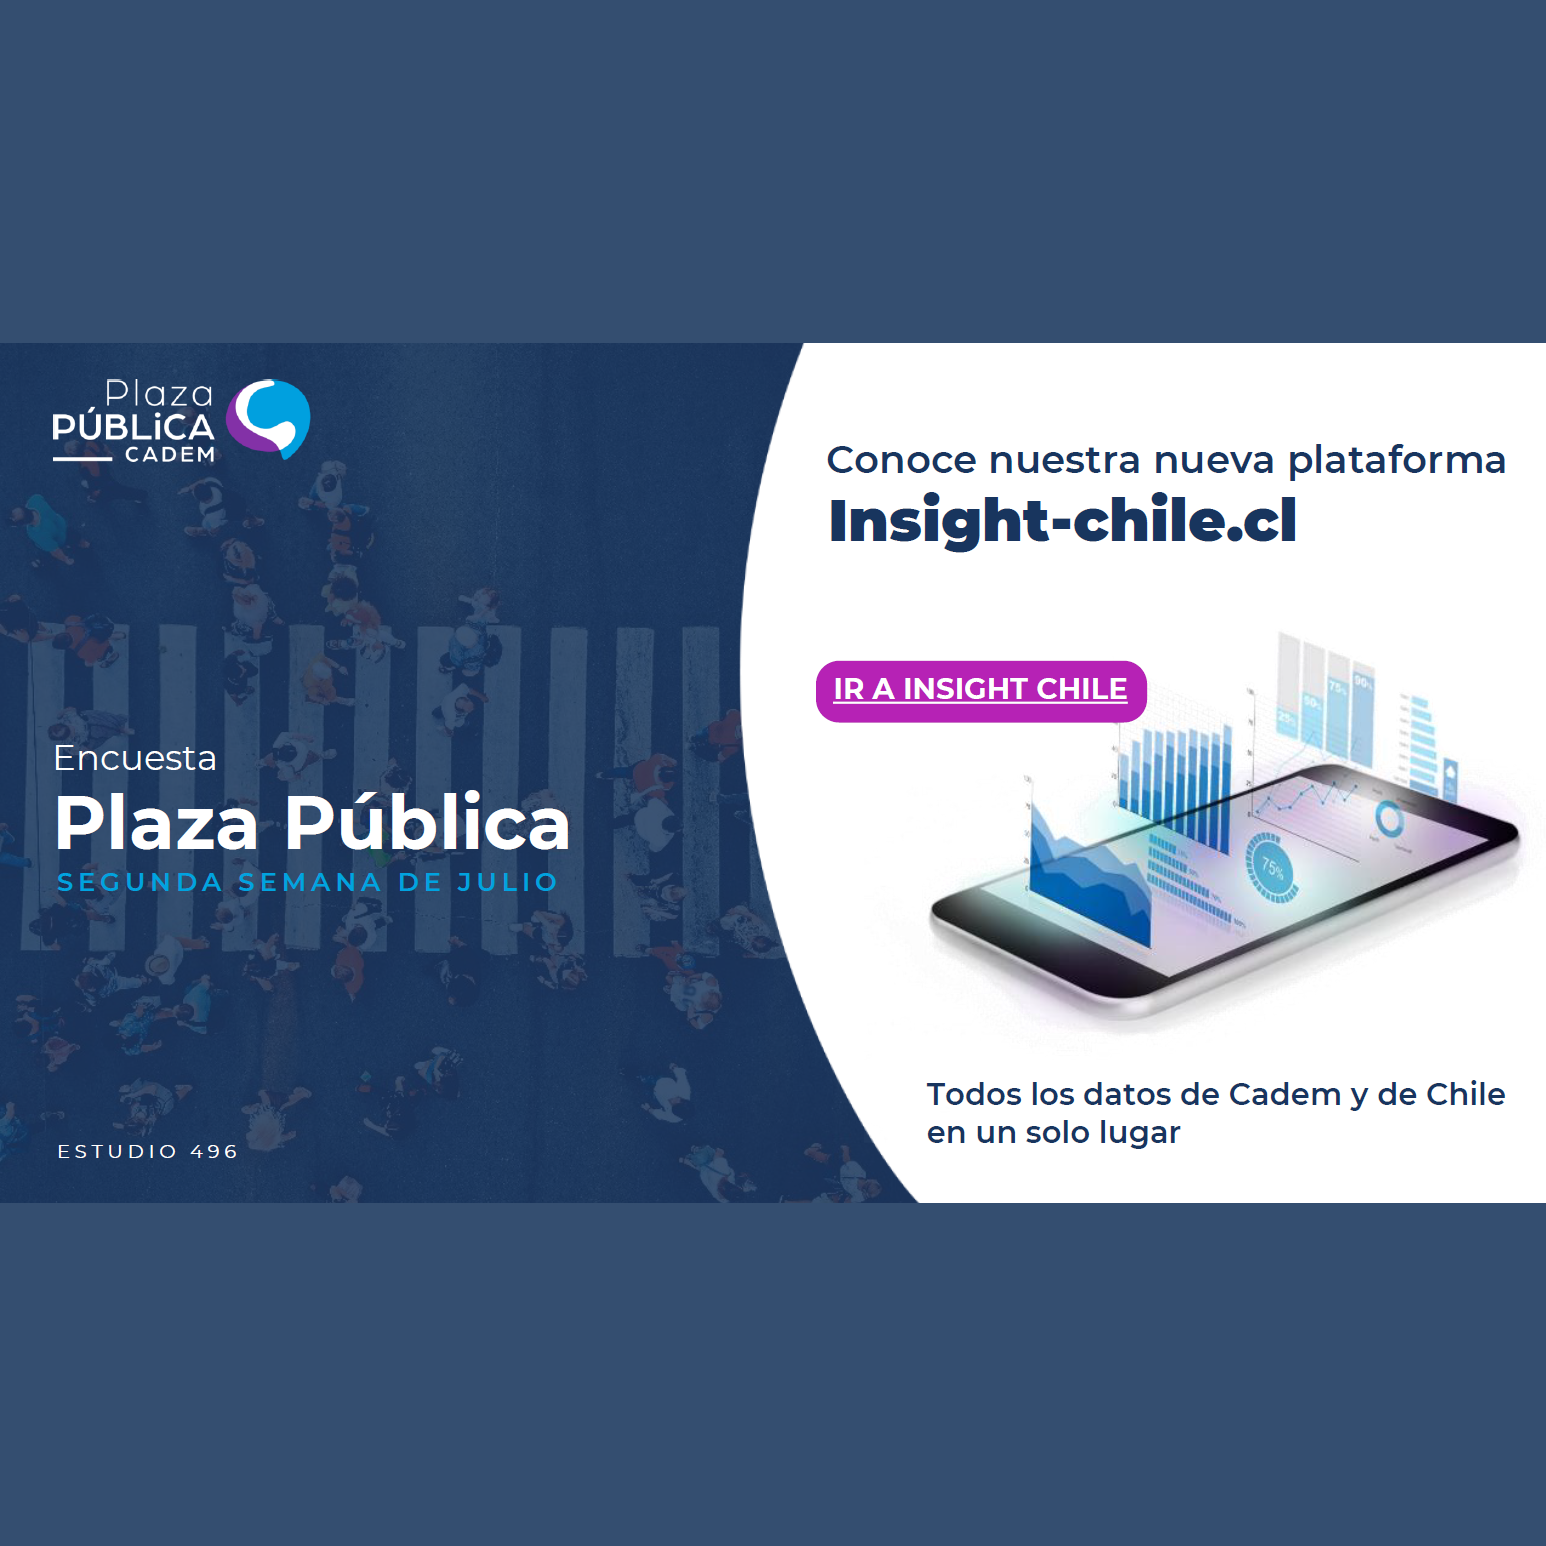 Estudio: Encuesta Plaza Pública – 2da semana de julio